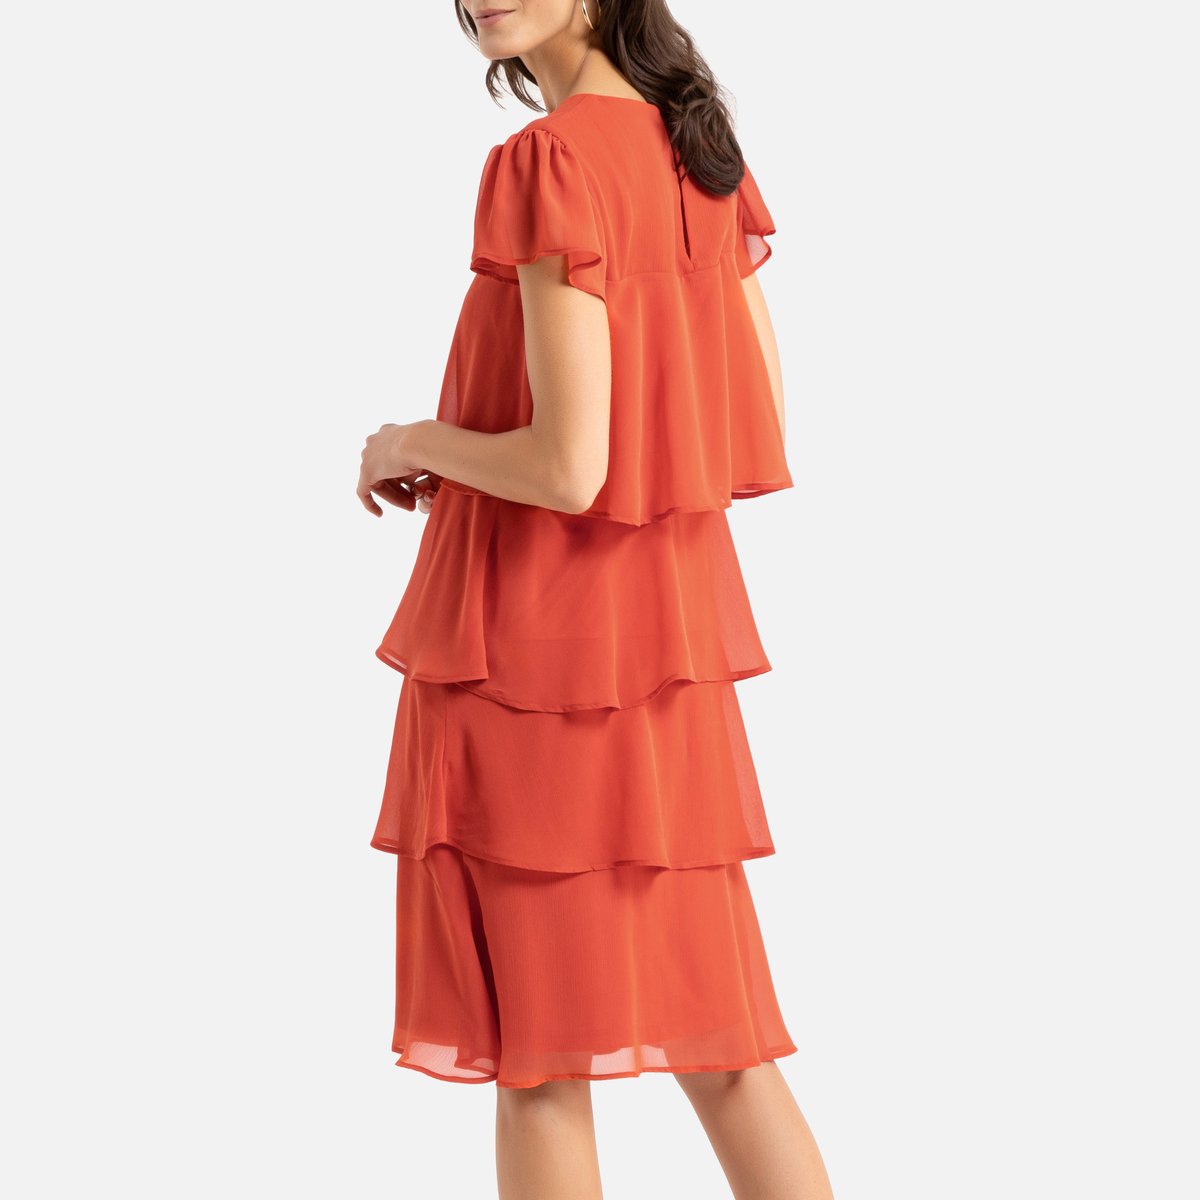 Платье La Redoute С воланом из жатого крепа 36 (FR) - 42 (RUS) оранжевый, размер 36 (FR) - 42 (RUS) С воланом из жатого крепа 36 (FR) - 42 (RUS) оранжевый - фото 4